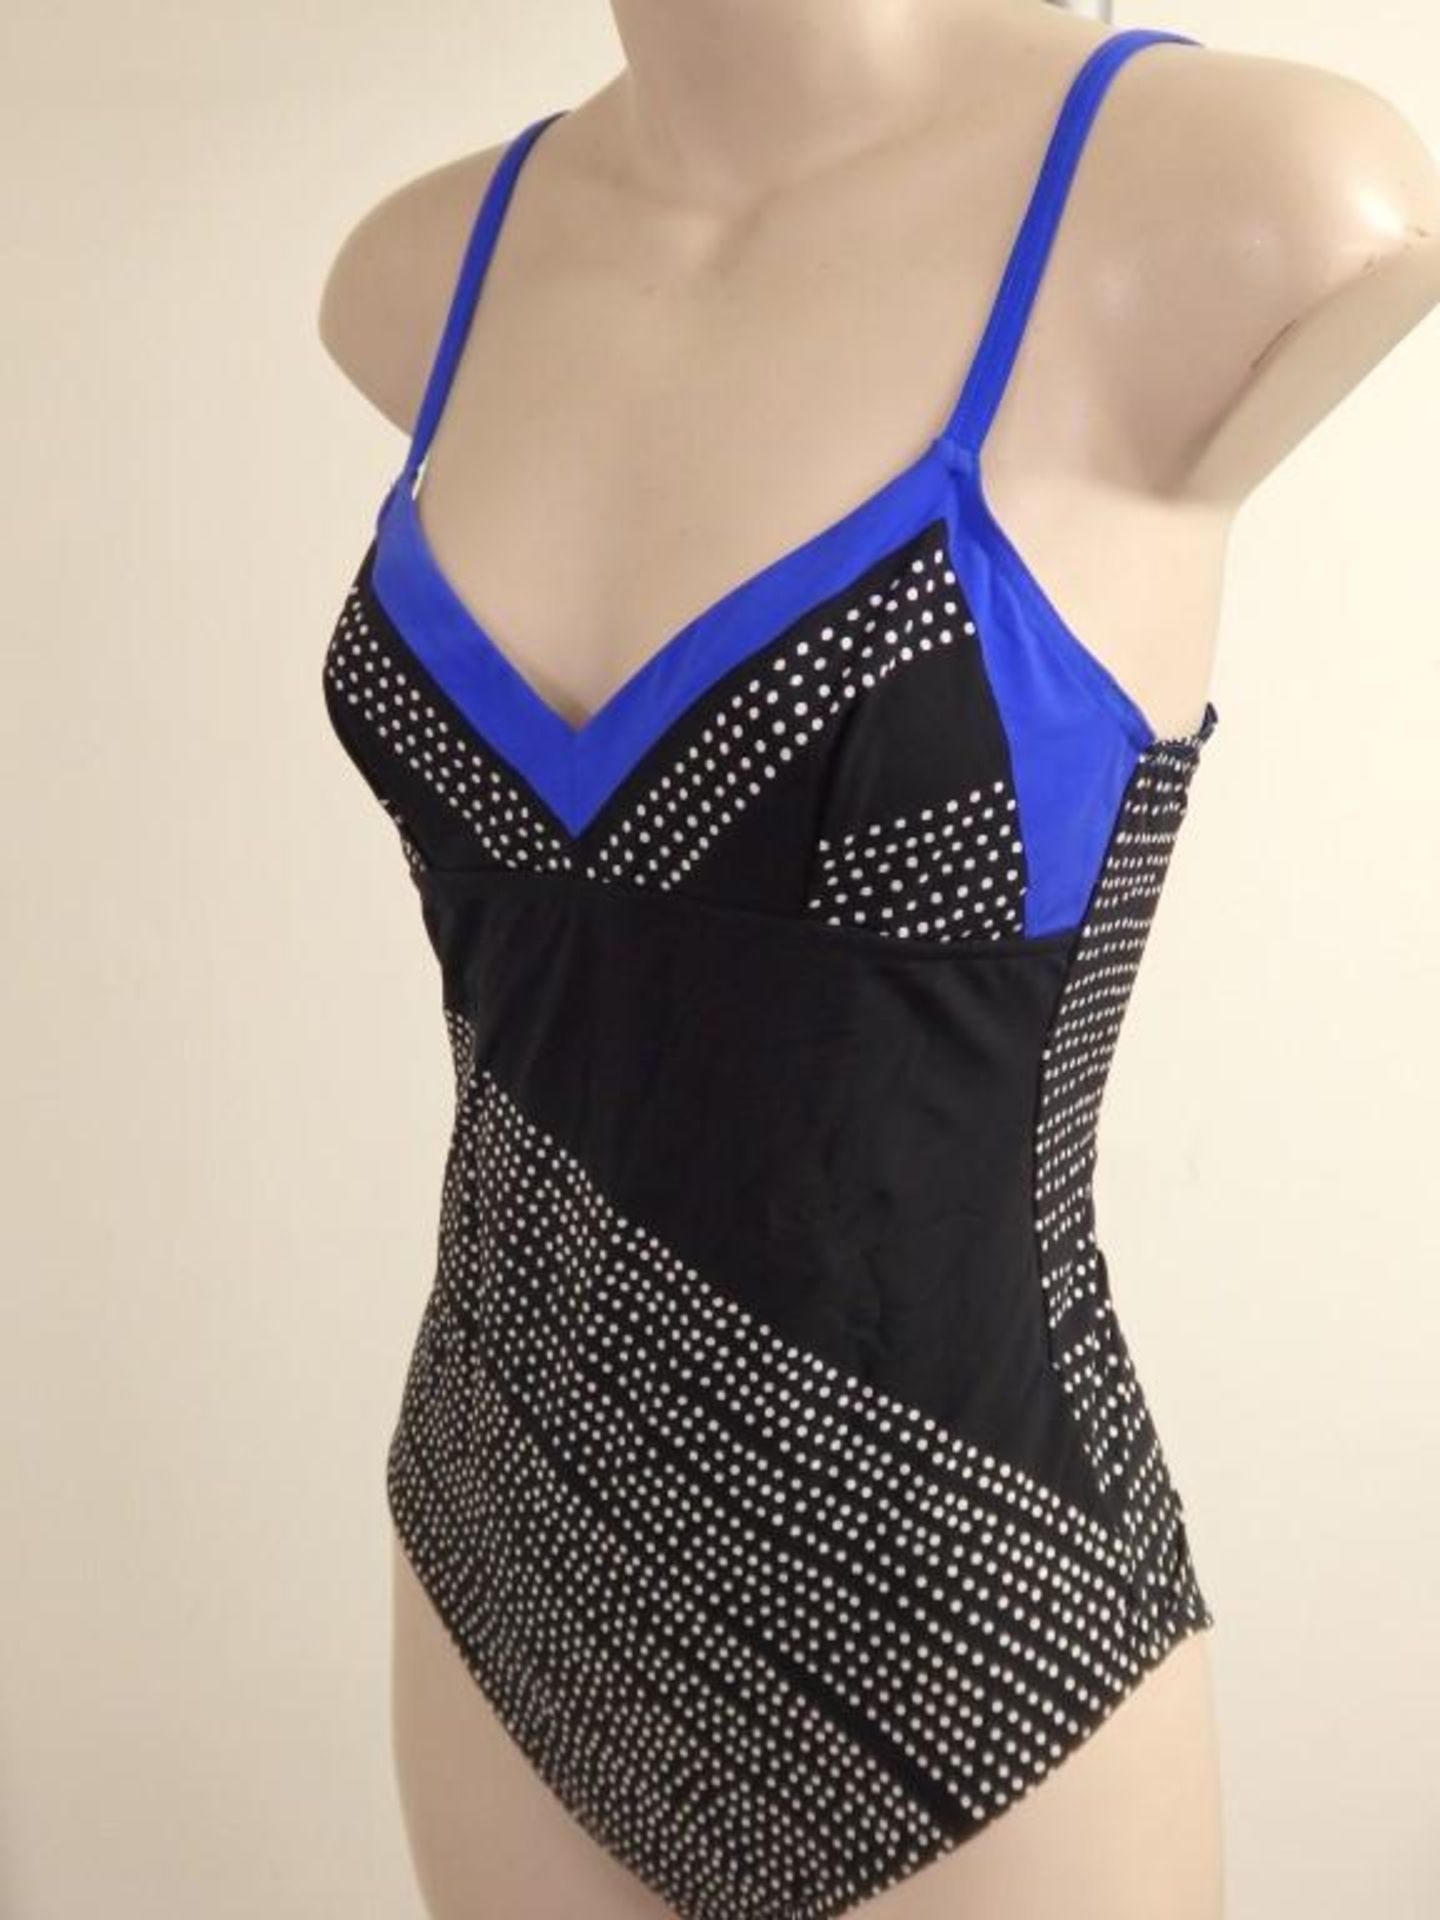 1 x Rasurel - Black Polka dot with royal blue trim & frill Tobago Swimsuit - B21039 - Size 2C - UK 3 - Image 8 of 8